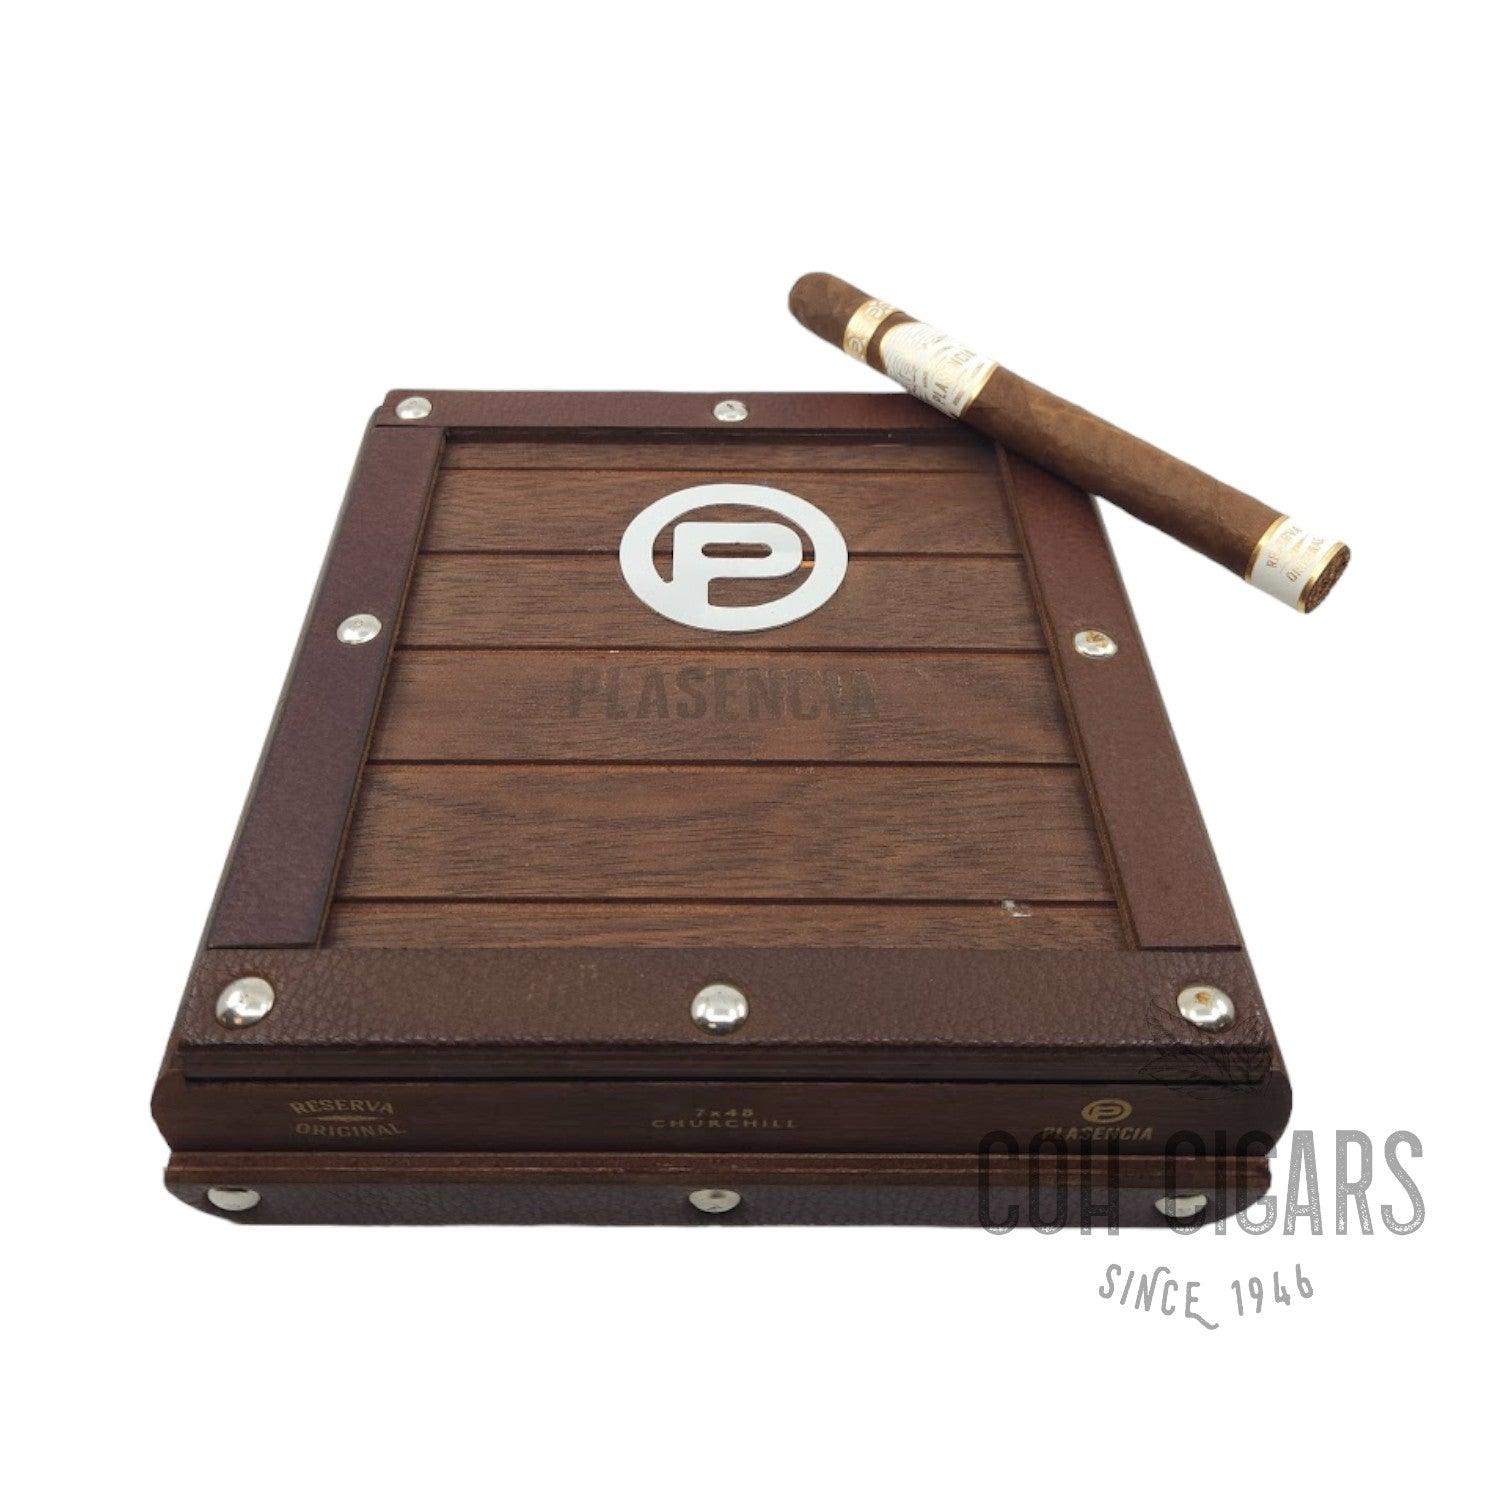 Plasencia Cigar | Reserva Original Churchill | Box 20 - hk.cohcigars